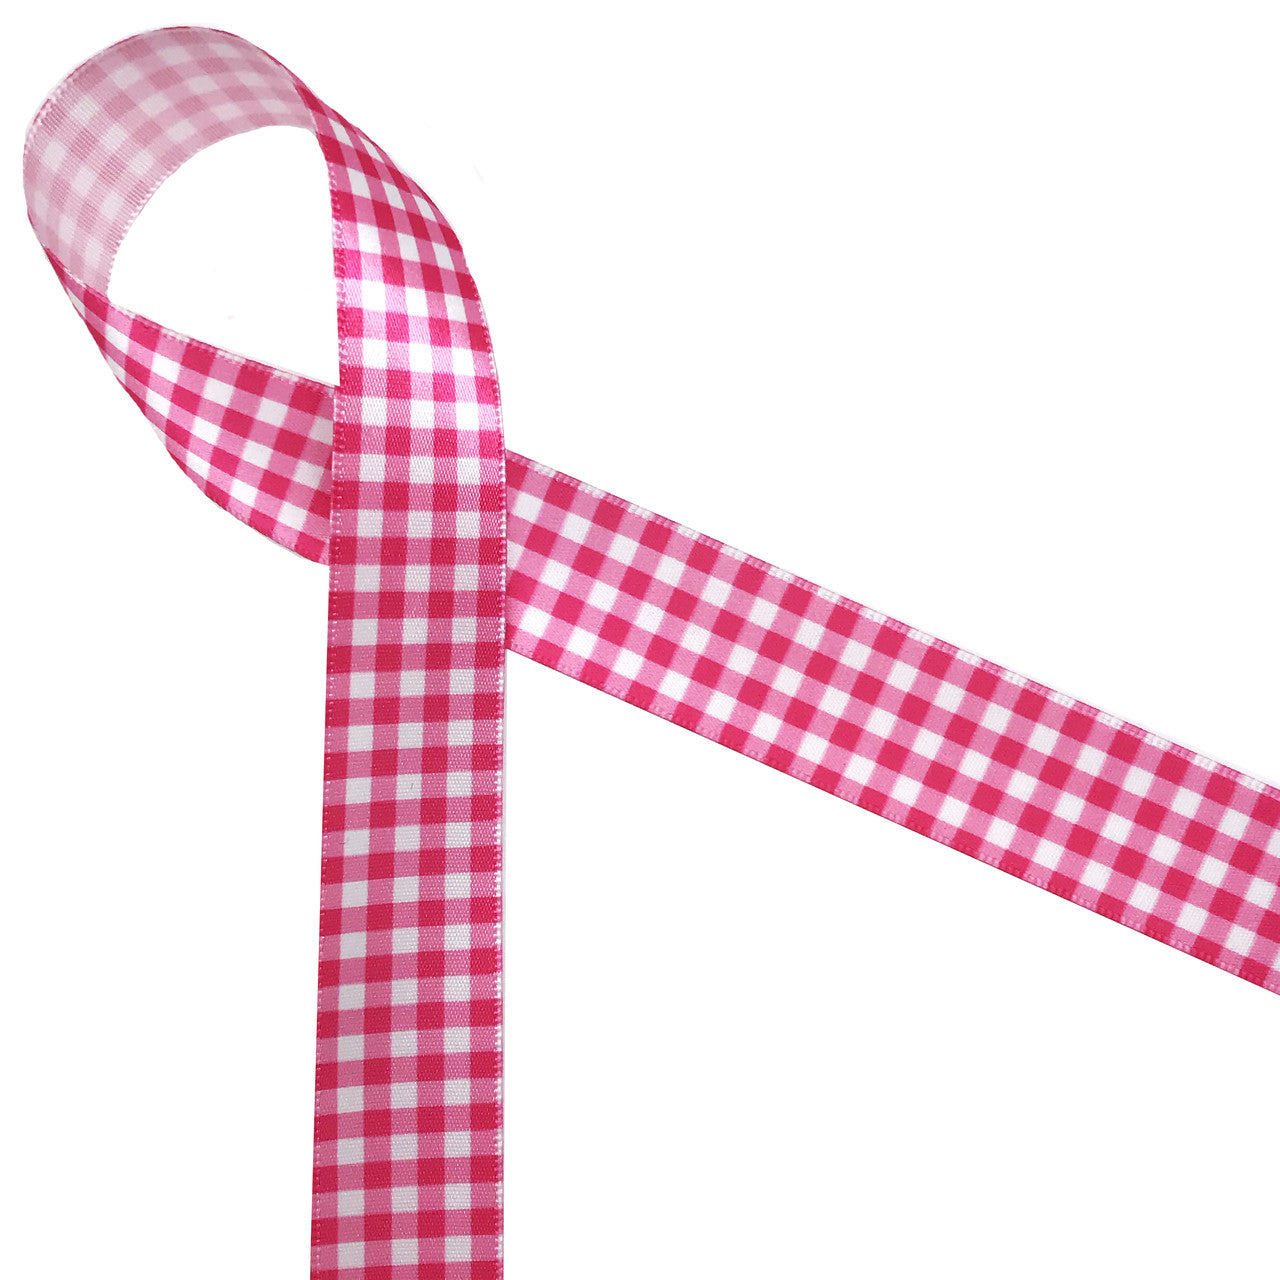  Pink Gingham Ribbon 3/8 X 25 Yards : Arts, Crafts & Sewing